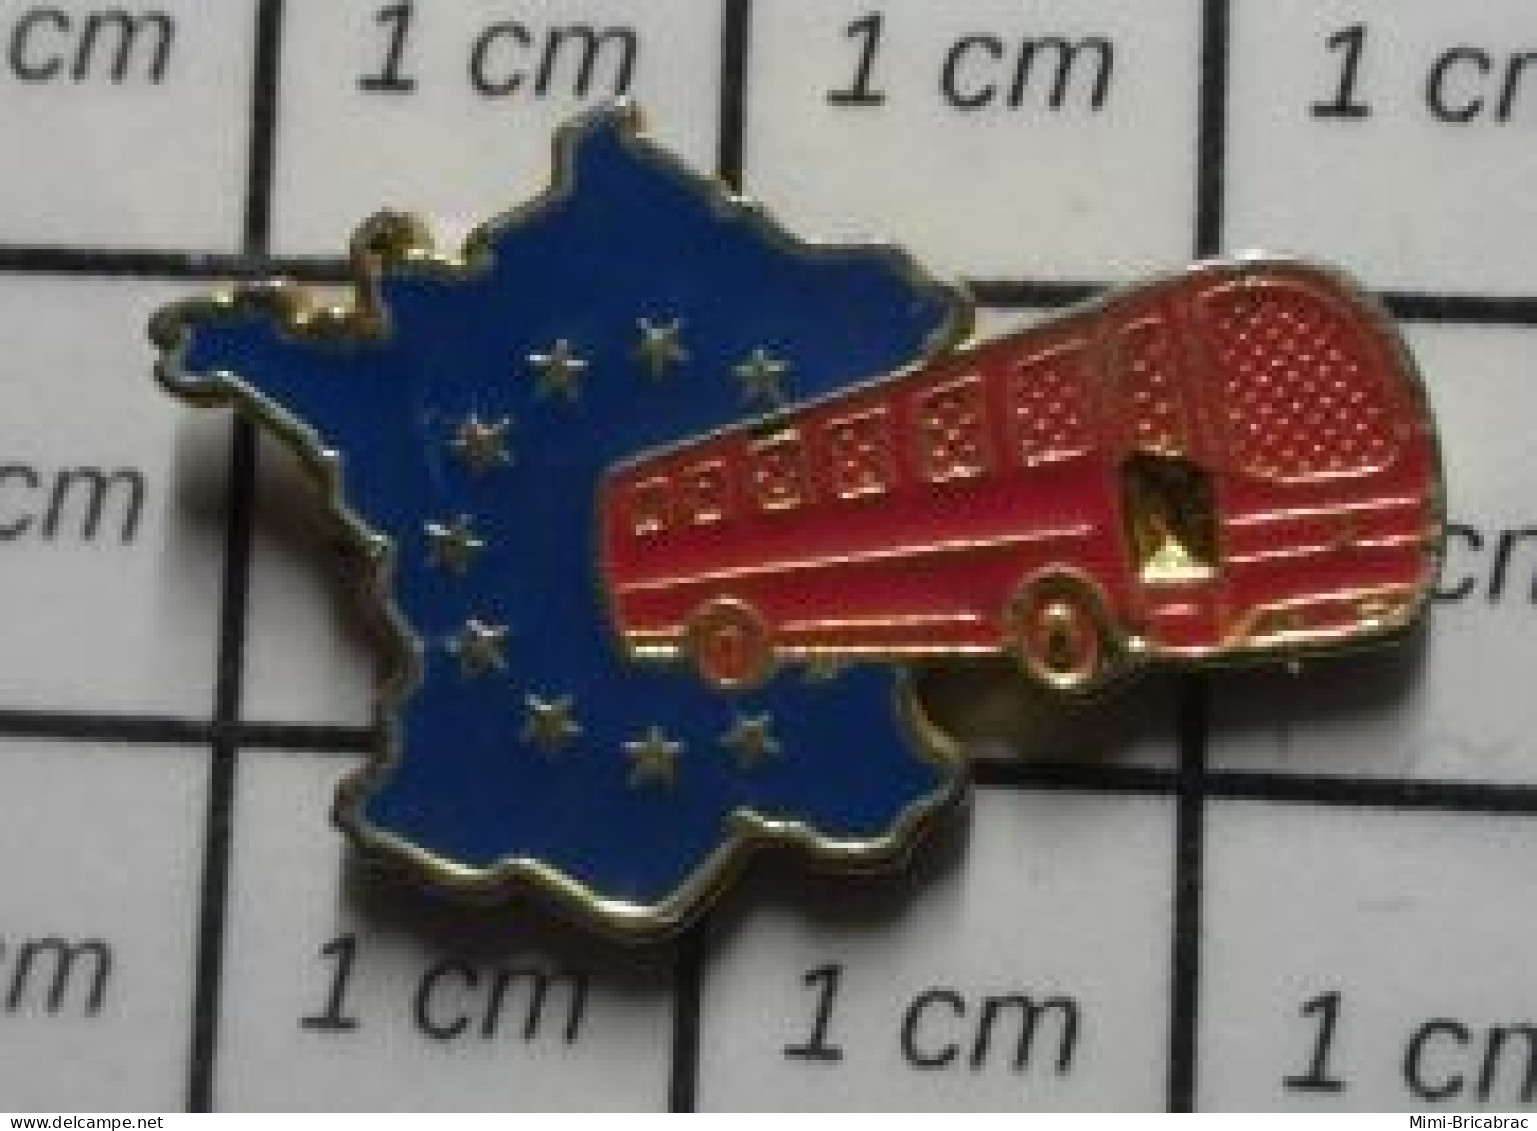 3417 Pin's Pins / Beau Et Rare / TRANSPORTS / FRANCE HEXAGONE BLEU AUTOCAR ROUGE - Transportation